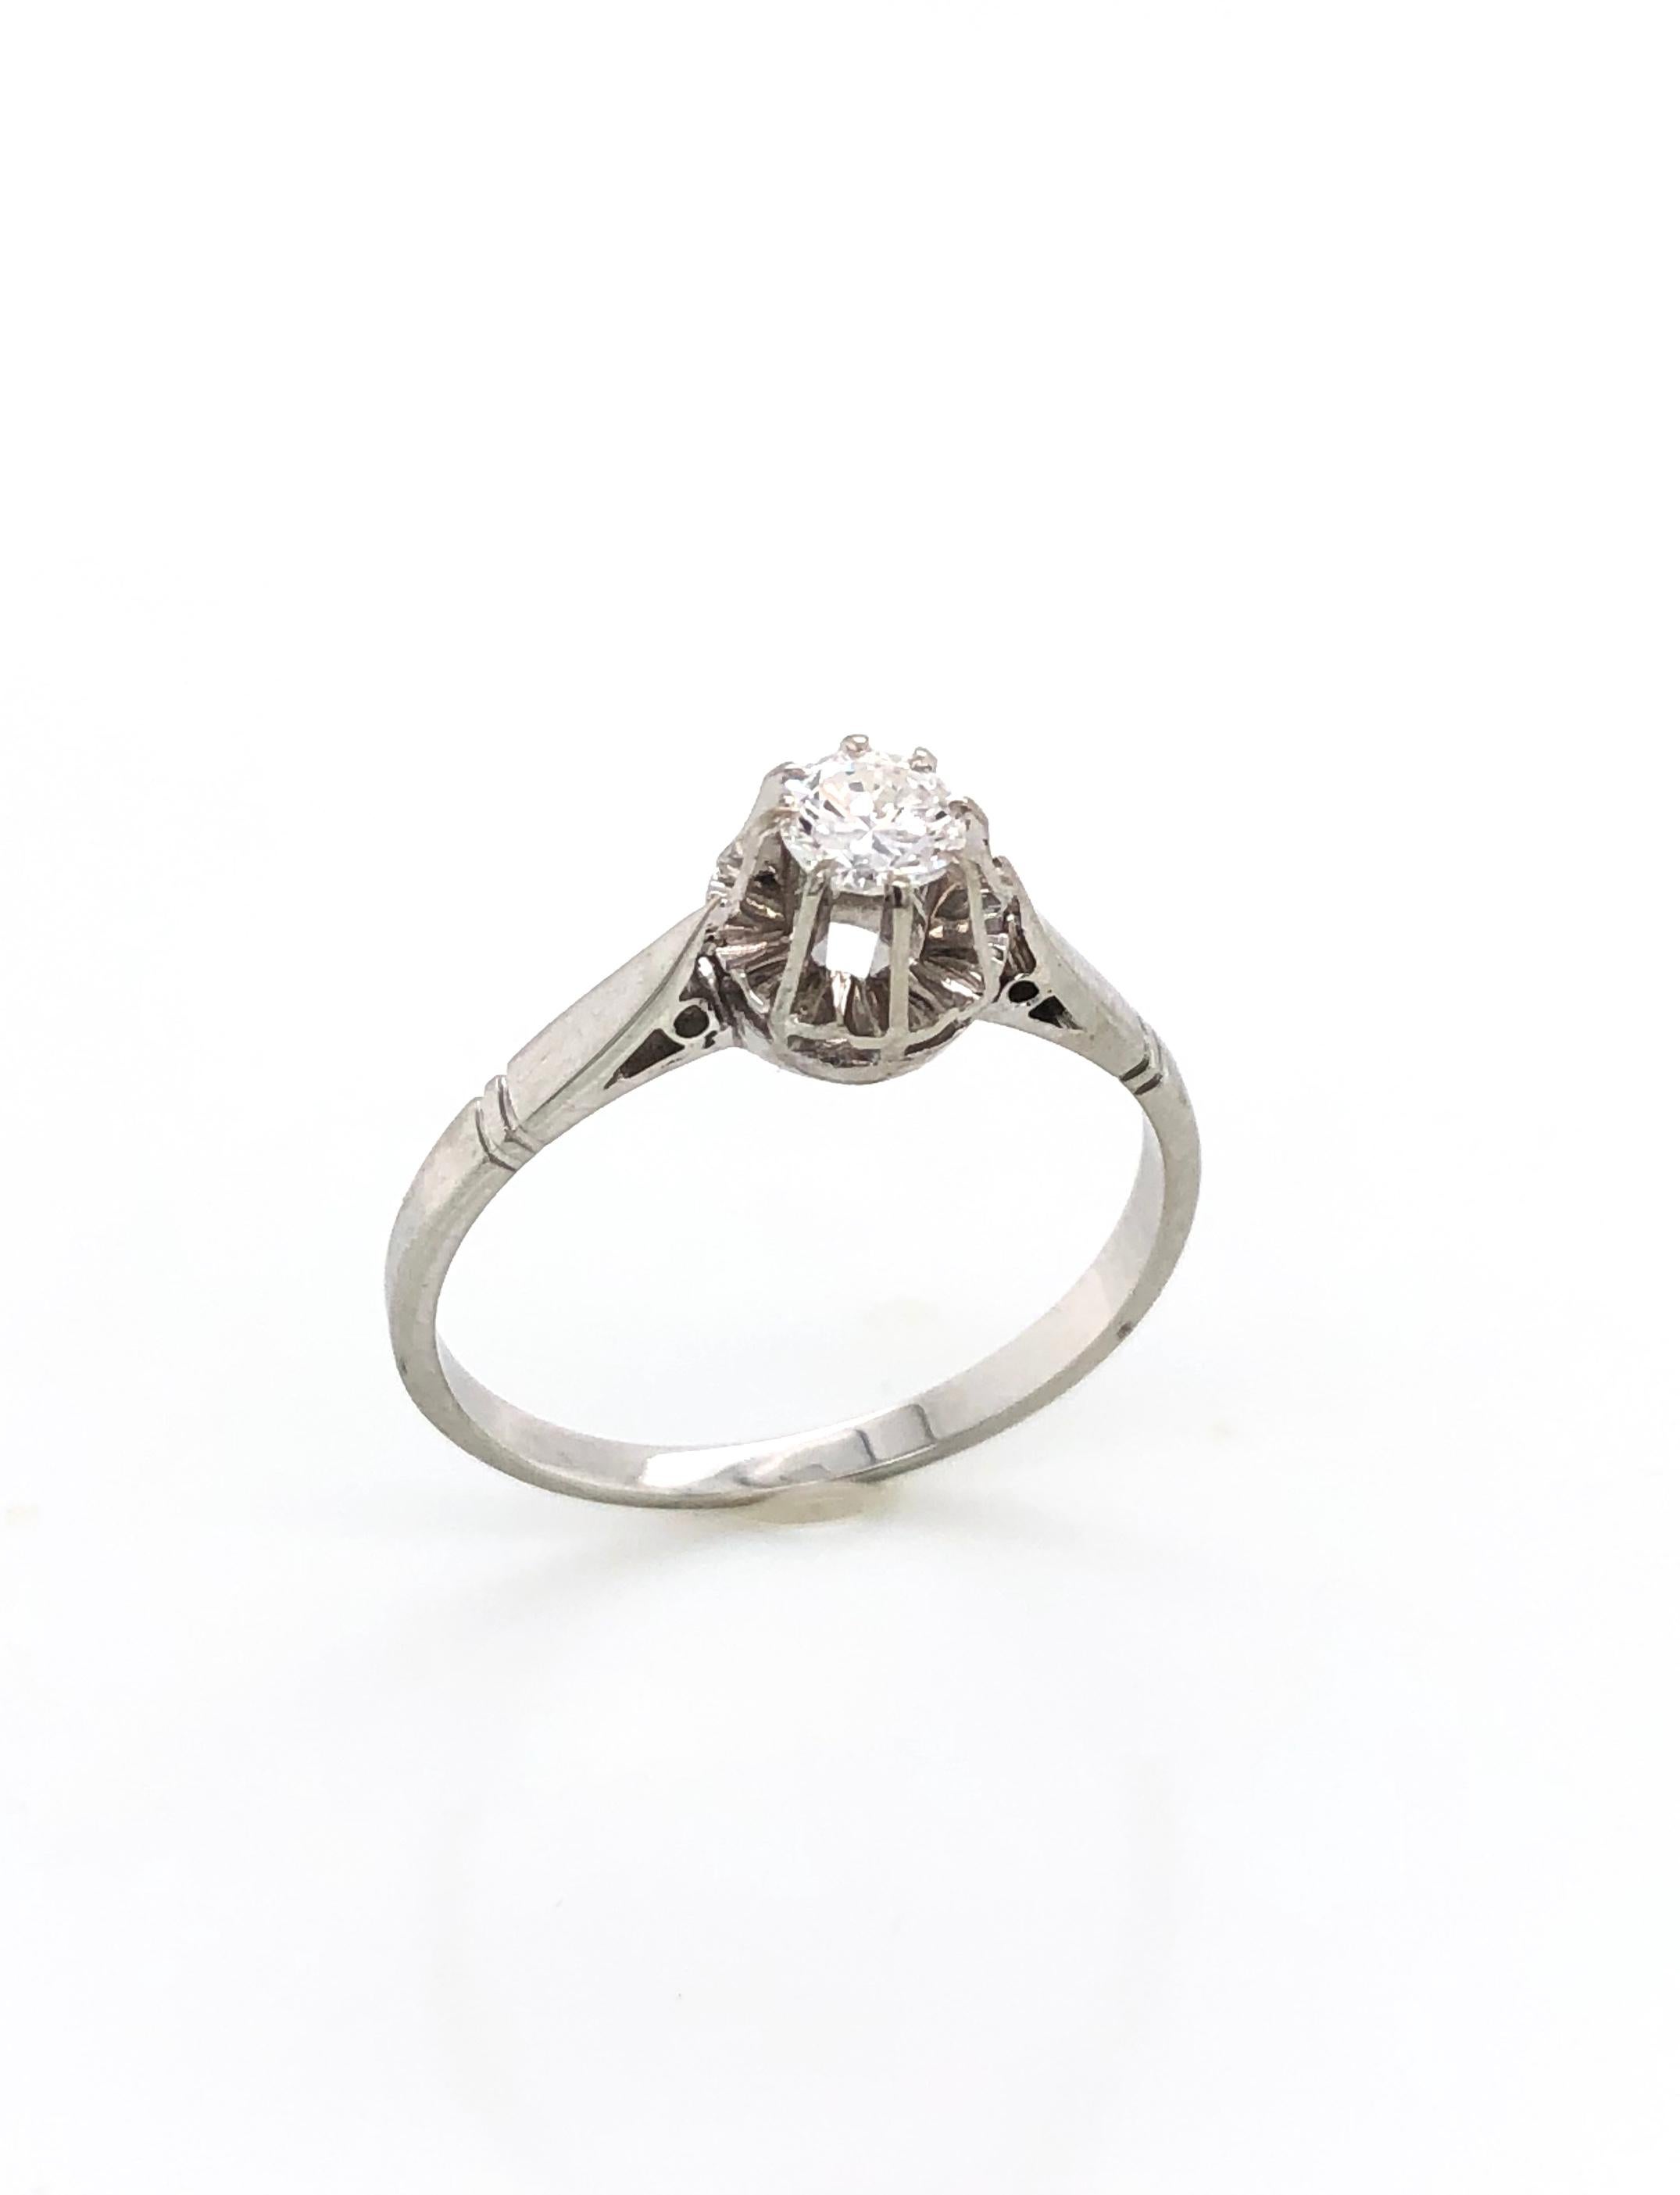 Brilliant Cut White Diamonds Old Ring White Gold 18 Karat For Sale